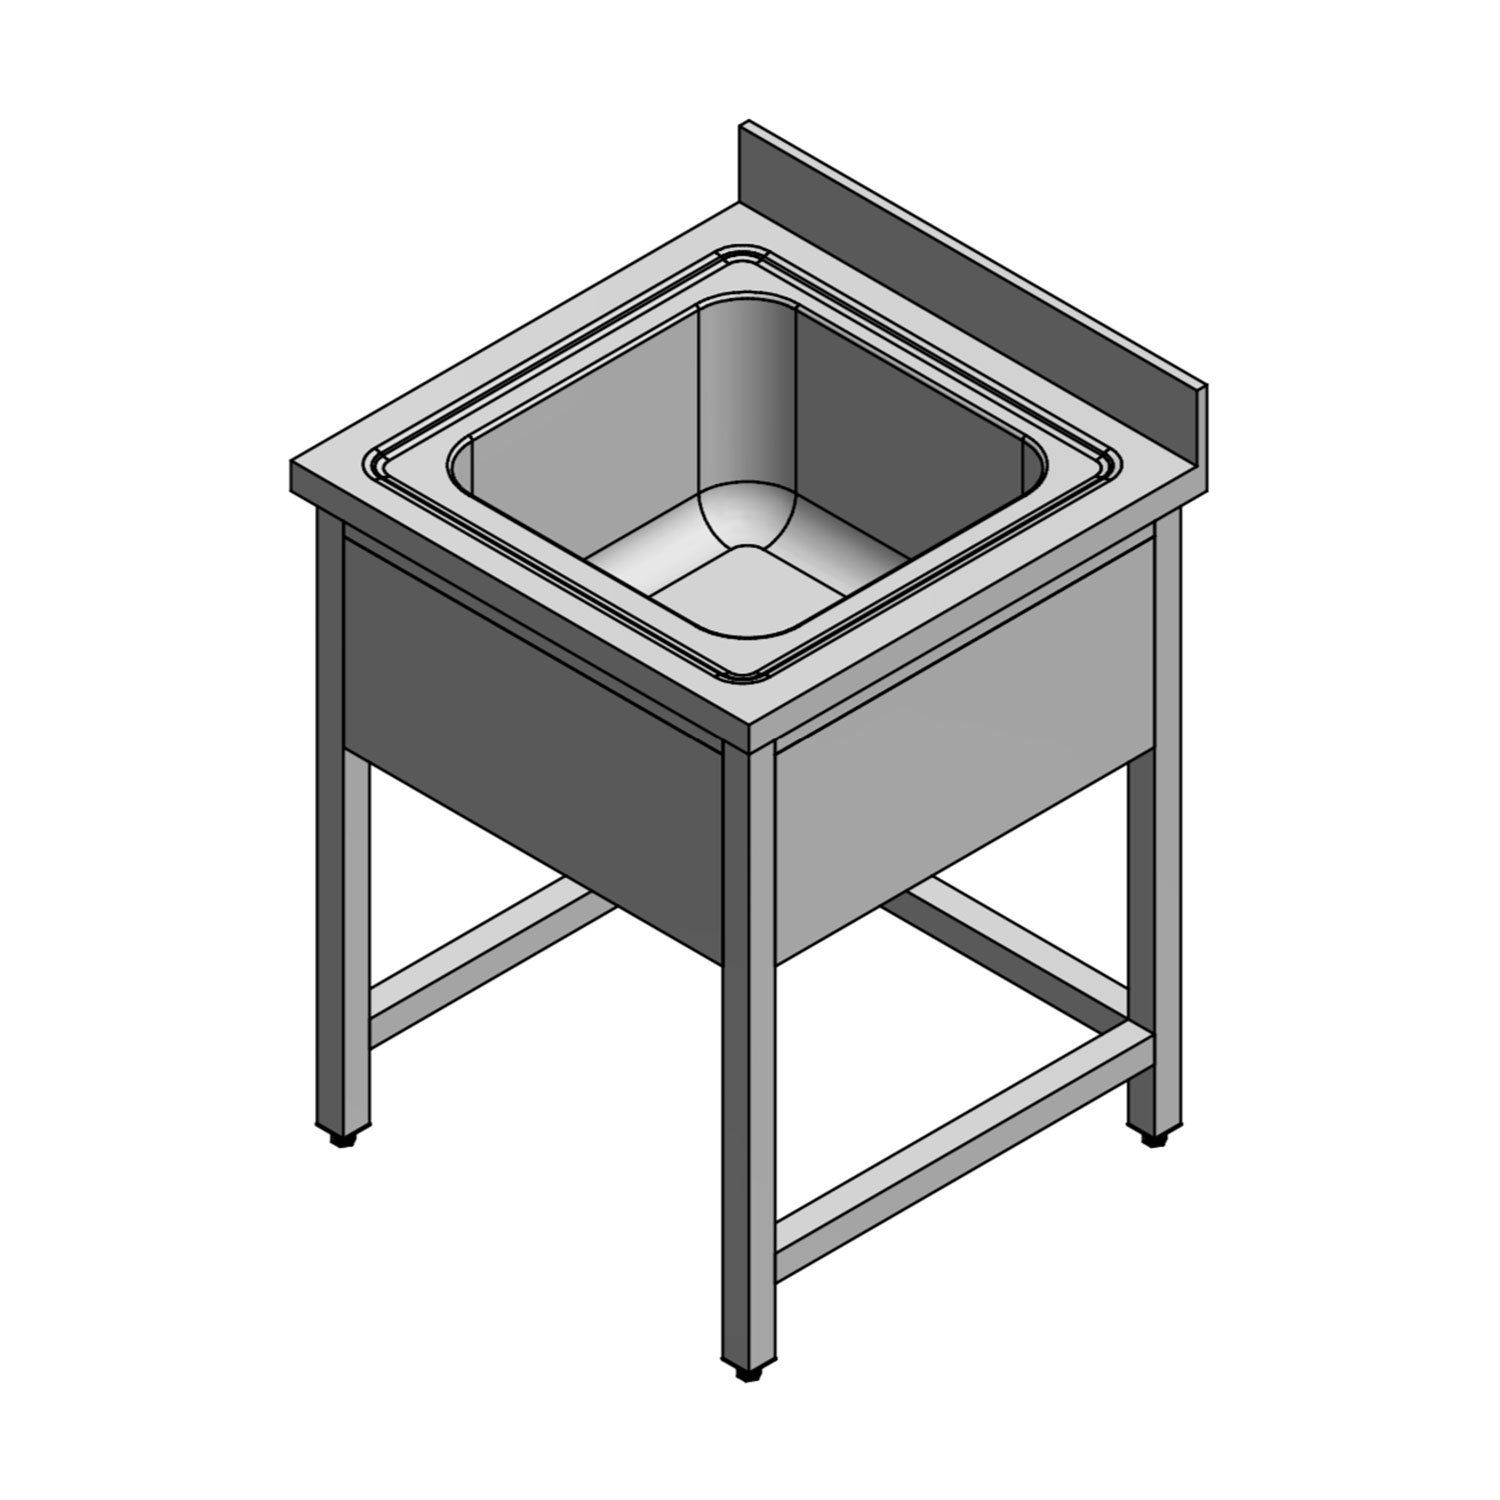 Stainless steel kitchen sink cabinet - SOFIA - LMC srl